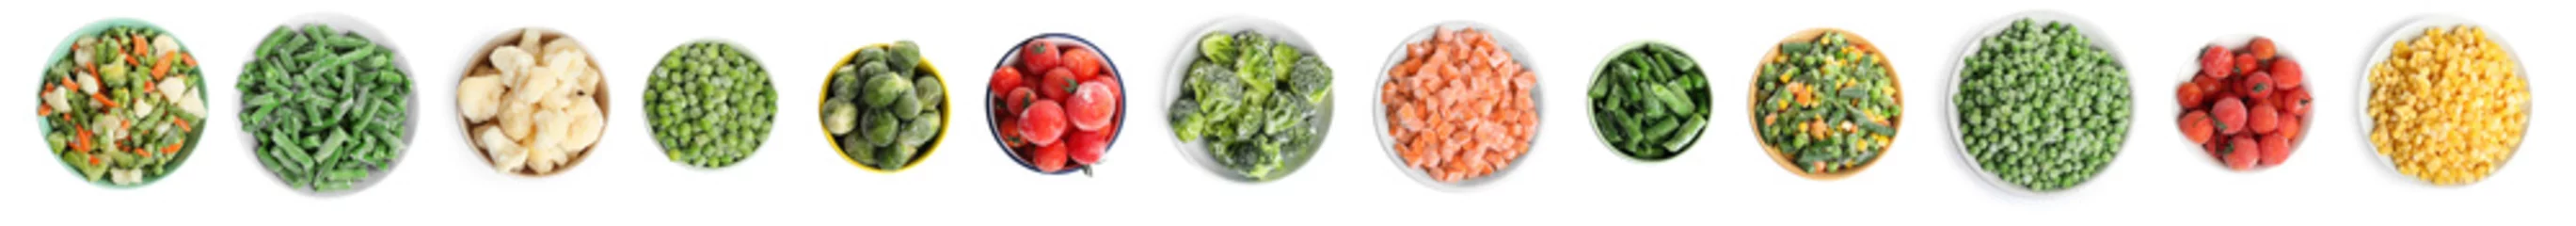 Fotobehang Verse groenten Set of different frozen vegetables on white background, top view. Banner design